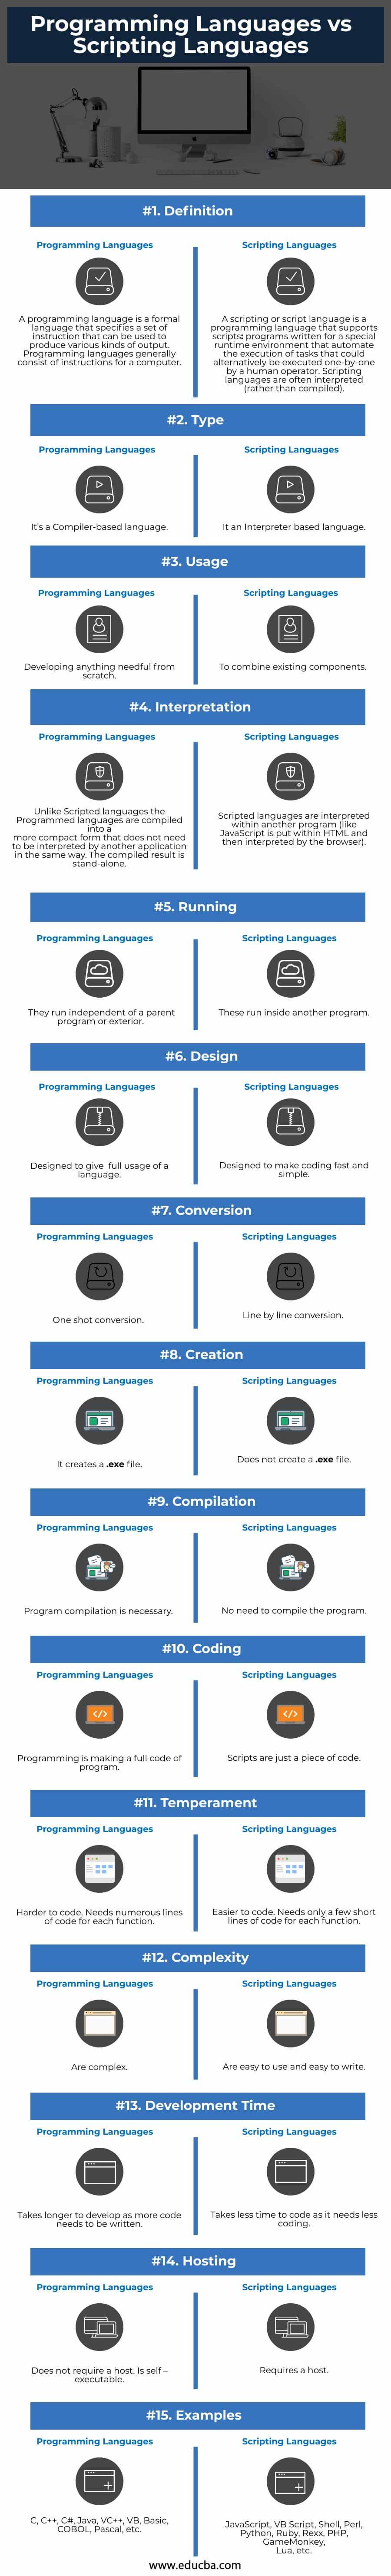 Programming-Languages-vs-Scripting-Languages-info